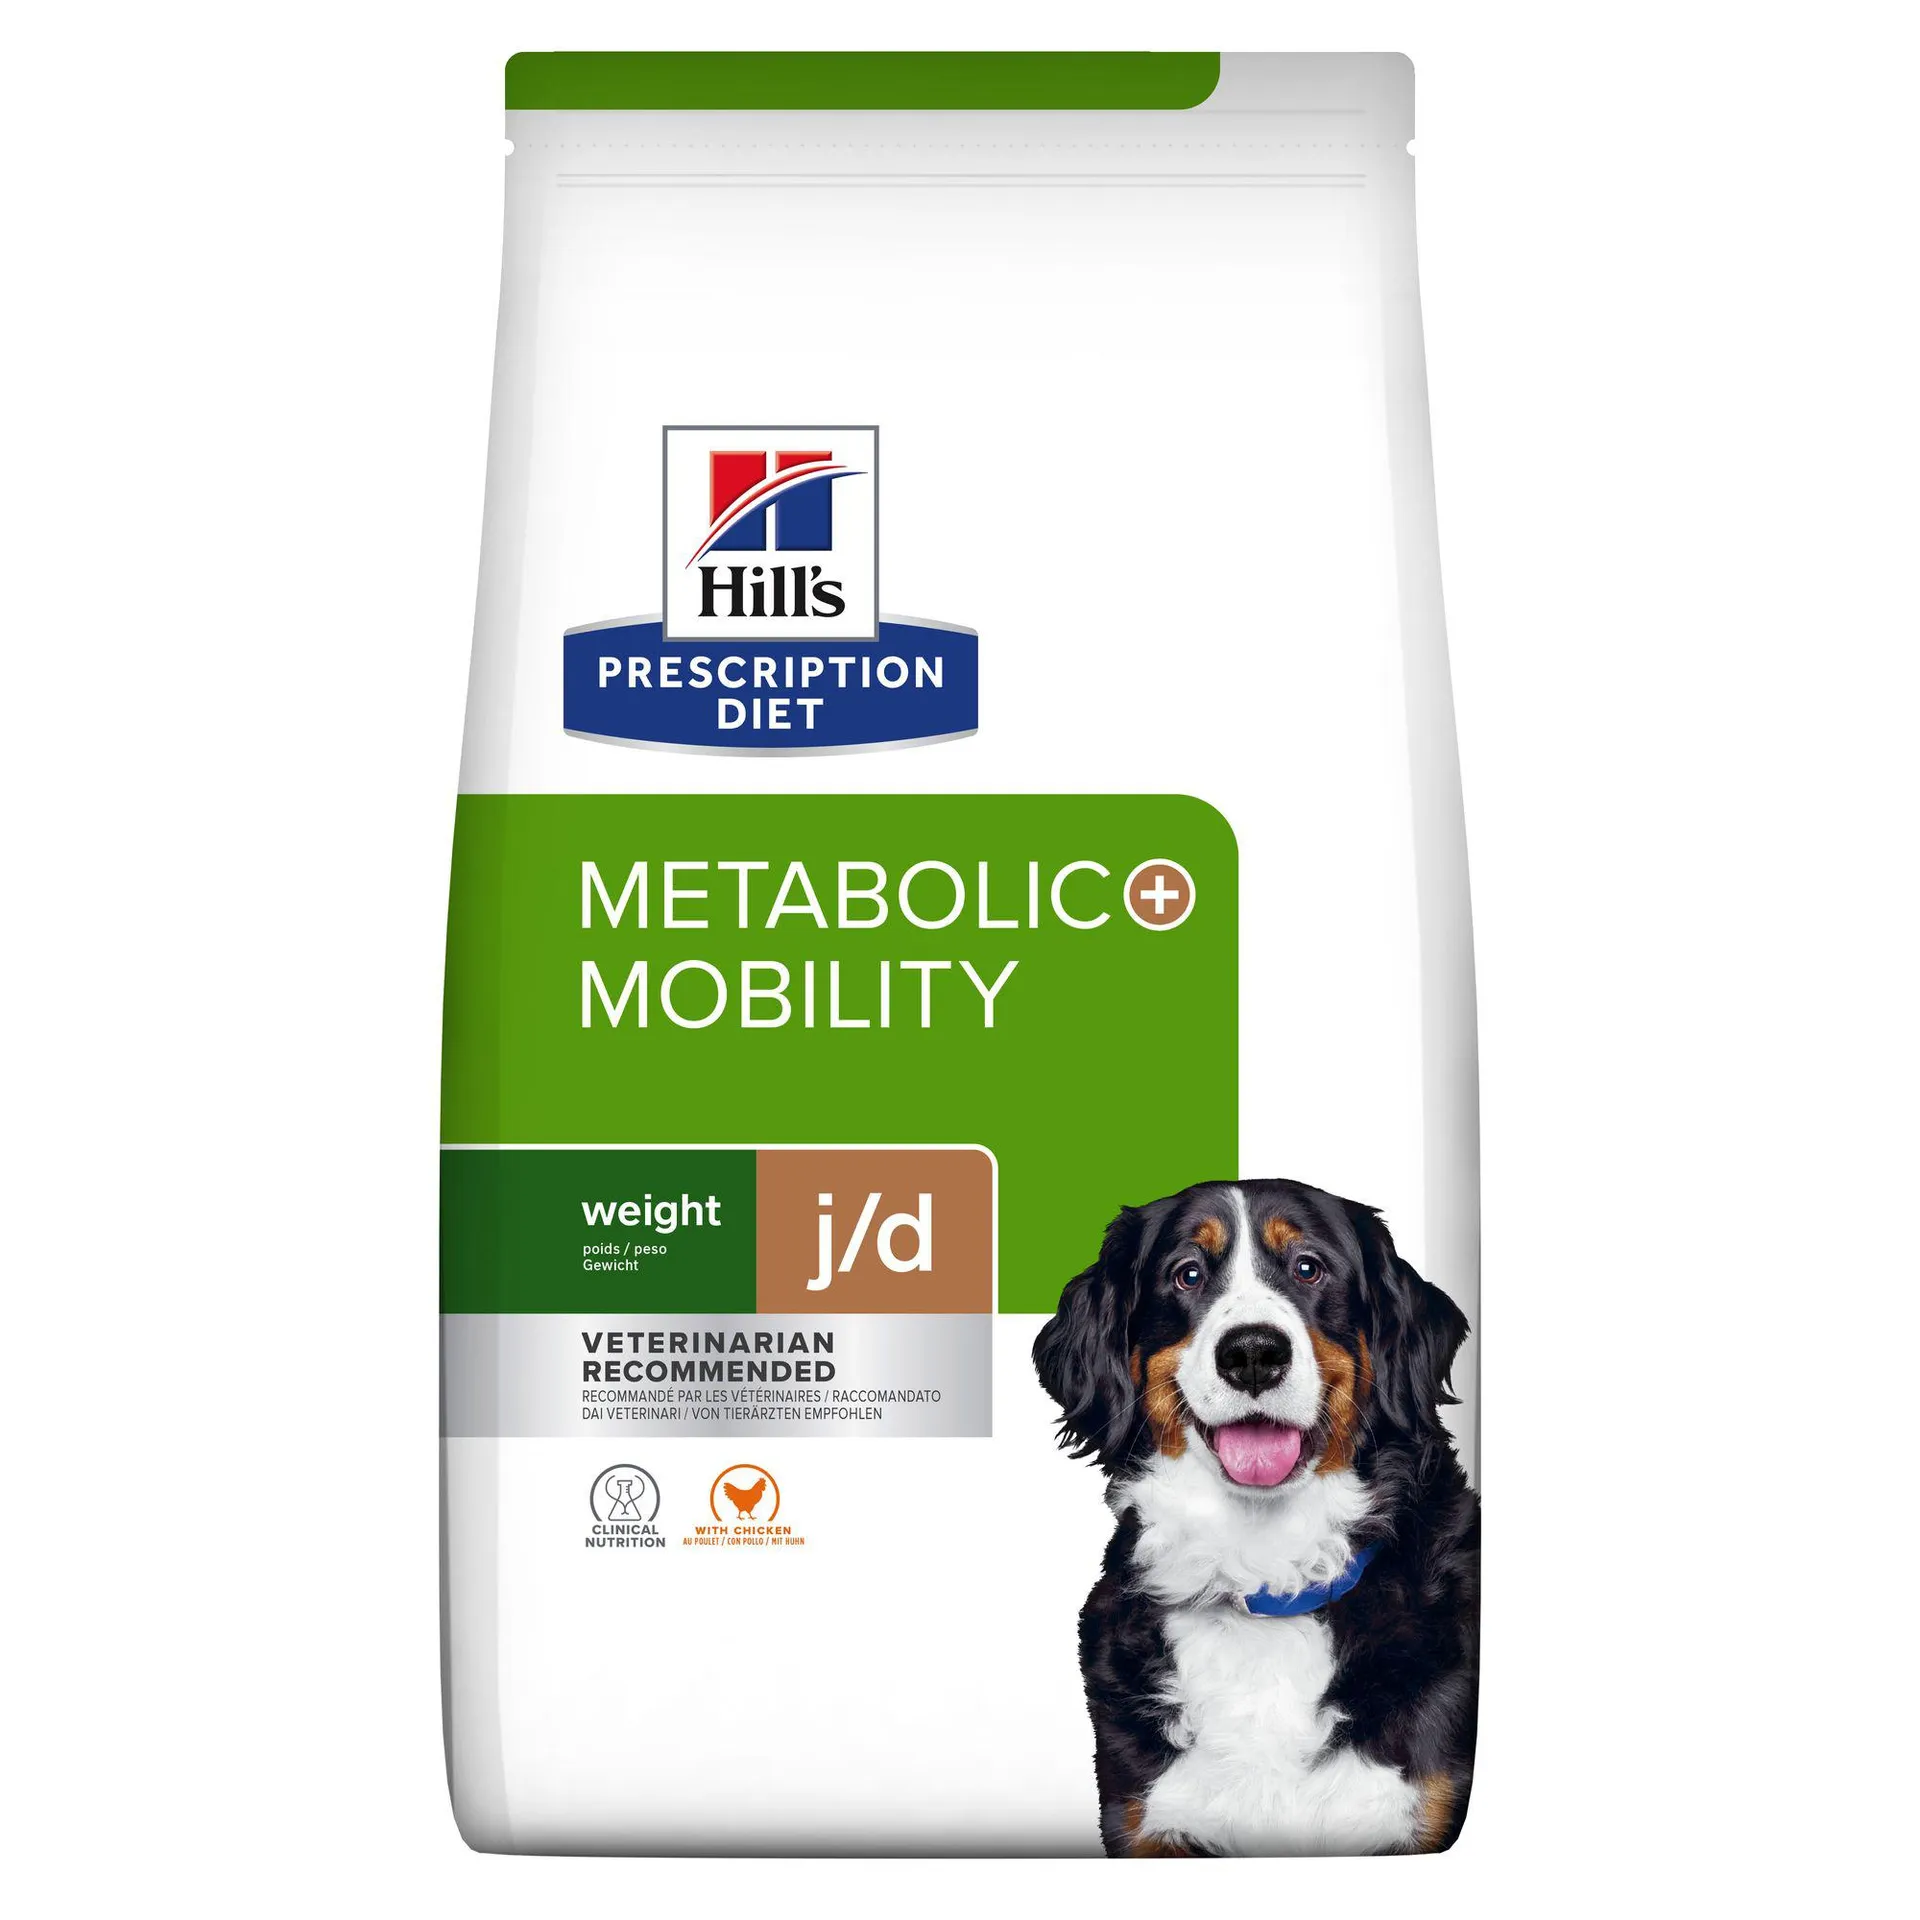 Hill's prescription diet metabolic + mobility weight management hondenvoer met kip zak 12kg